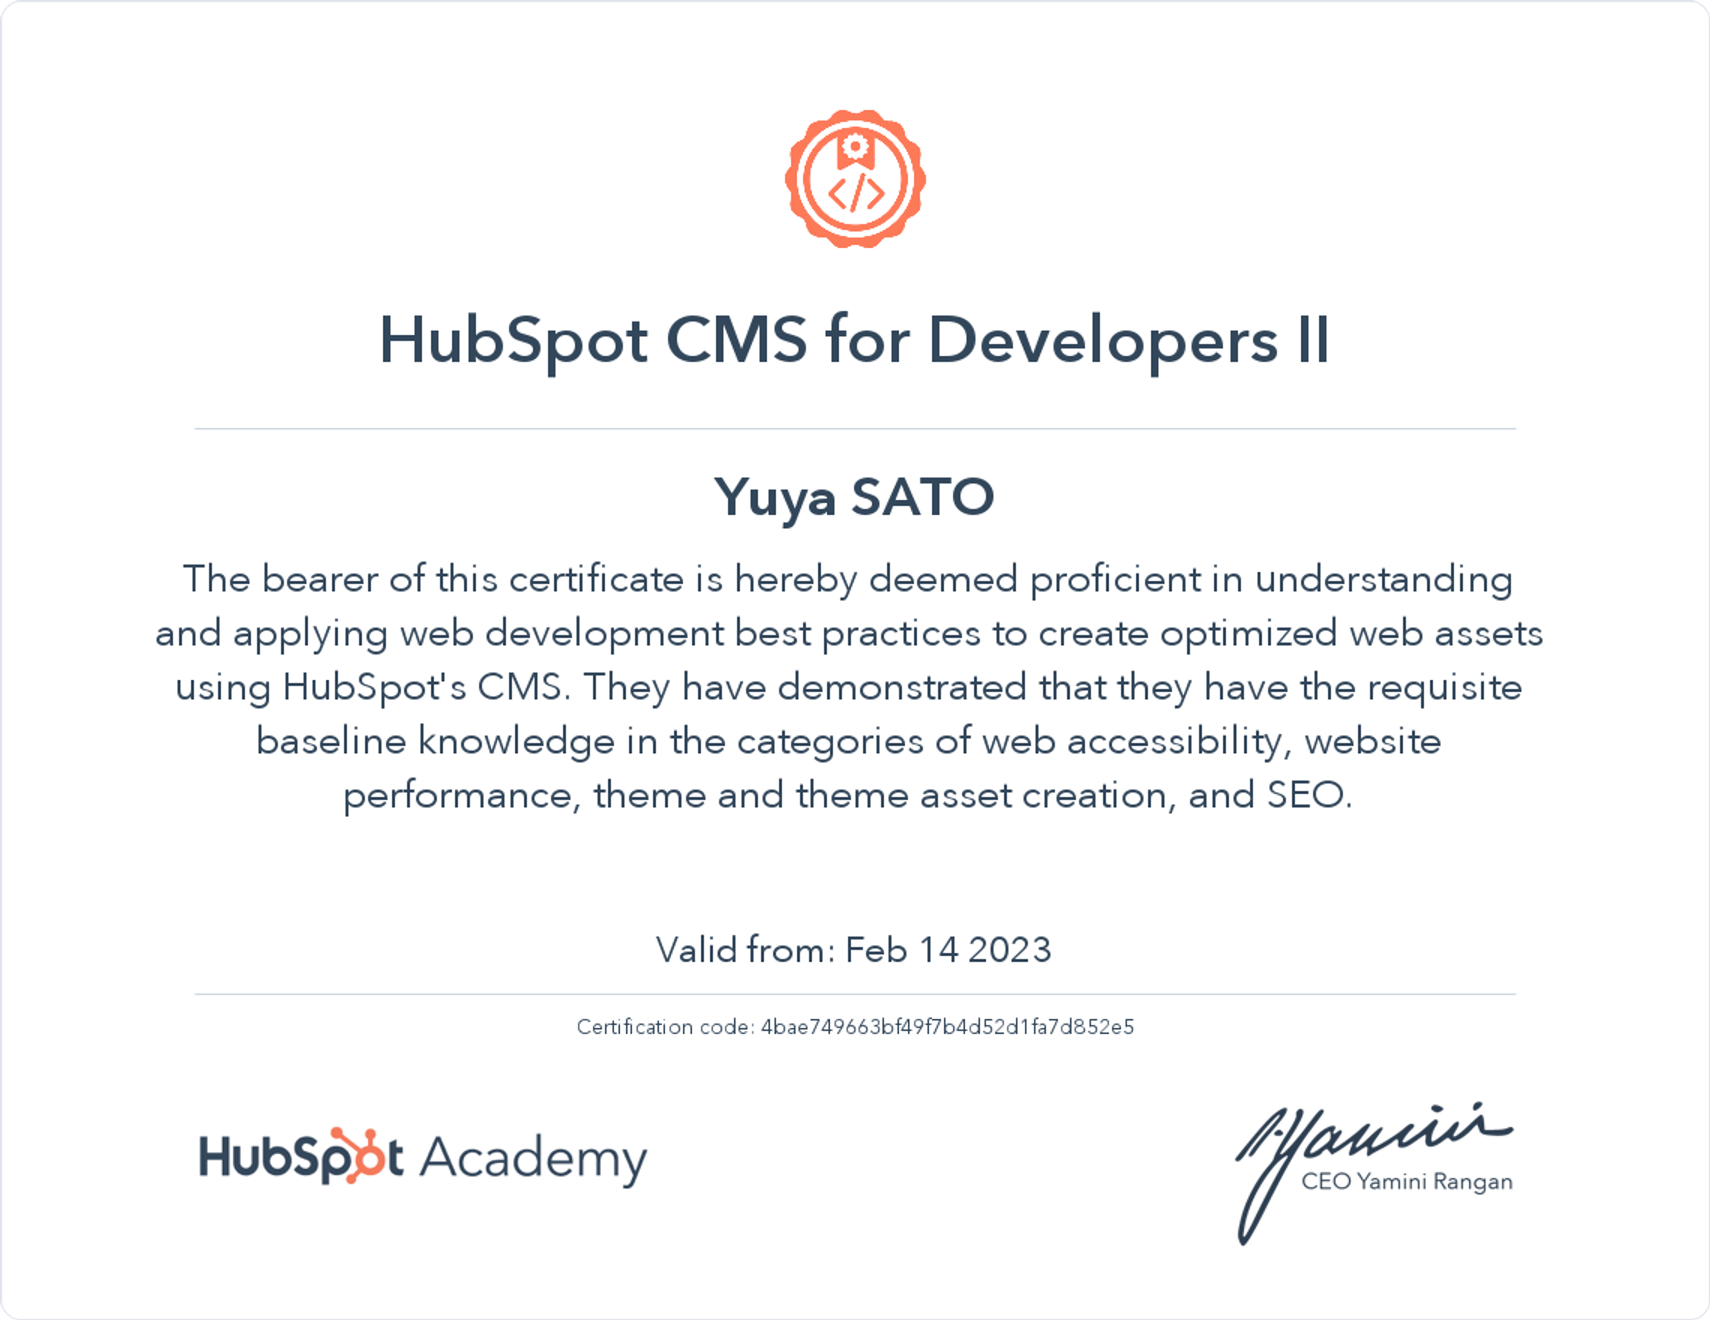 Hubspot Academyの「HubSpot CMS for Developers II: Best Practices」を受講して、certificateを取得した。のアイキャッチ画像